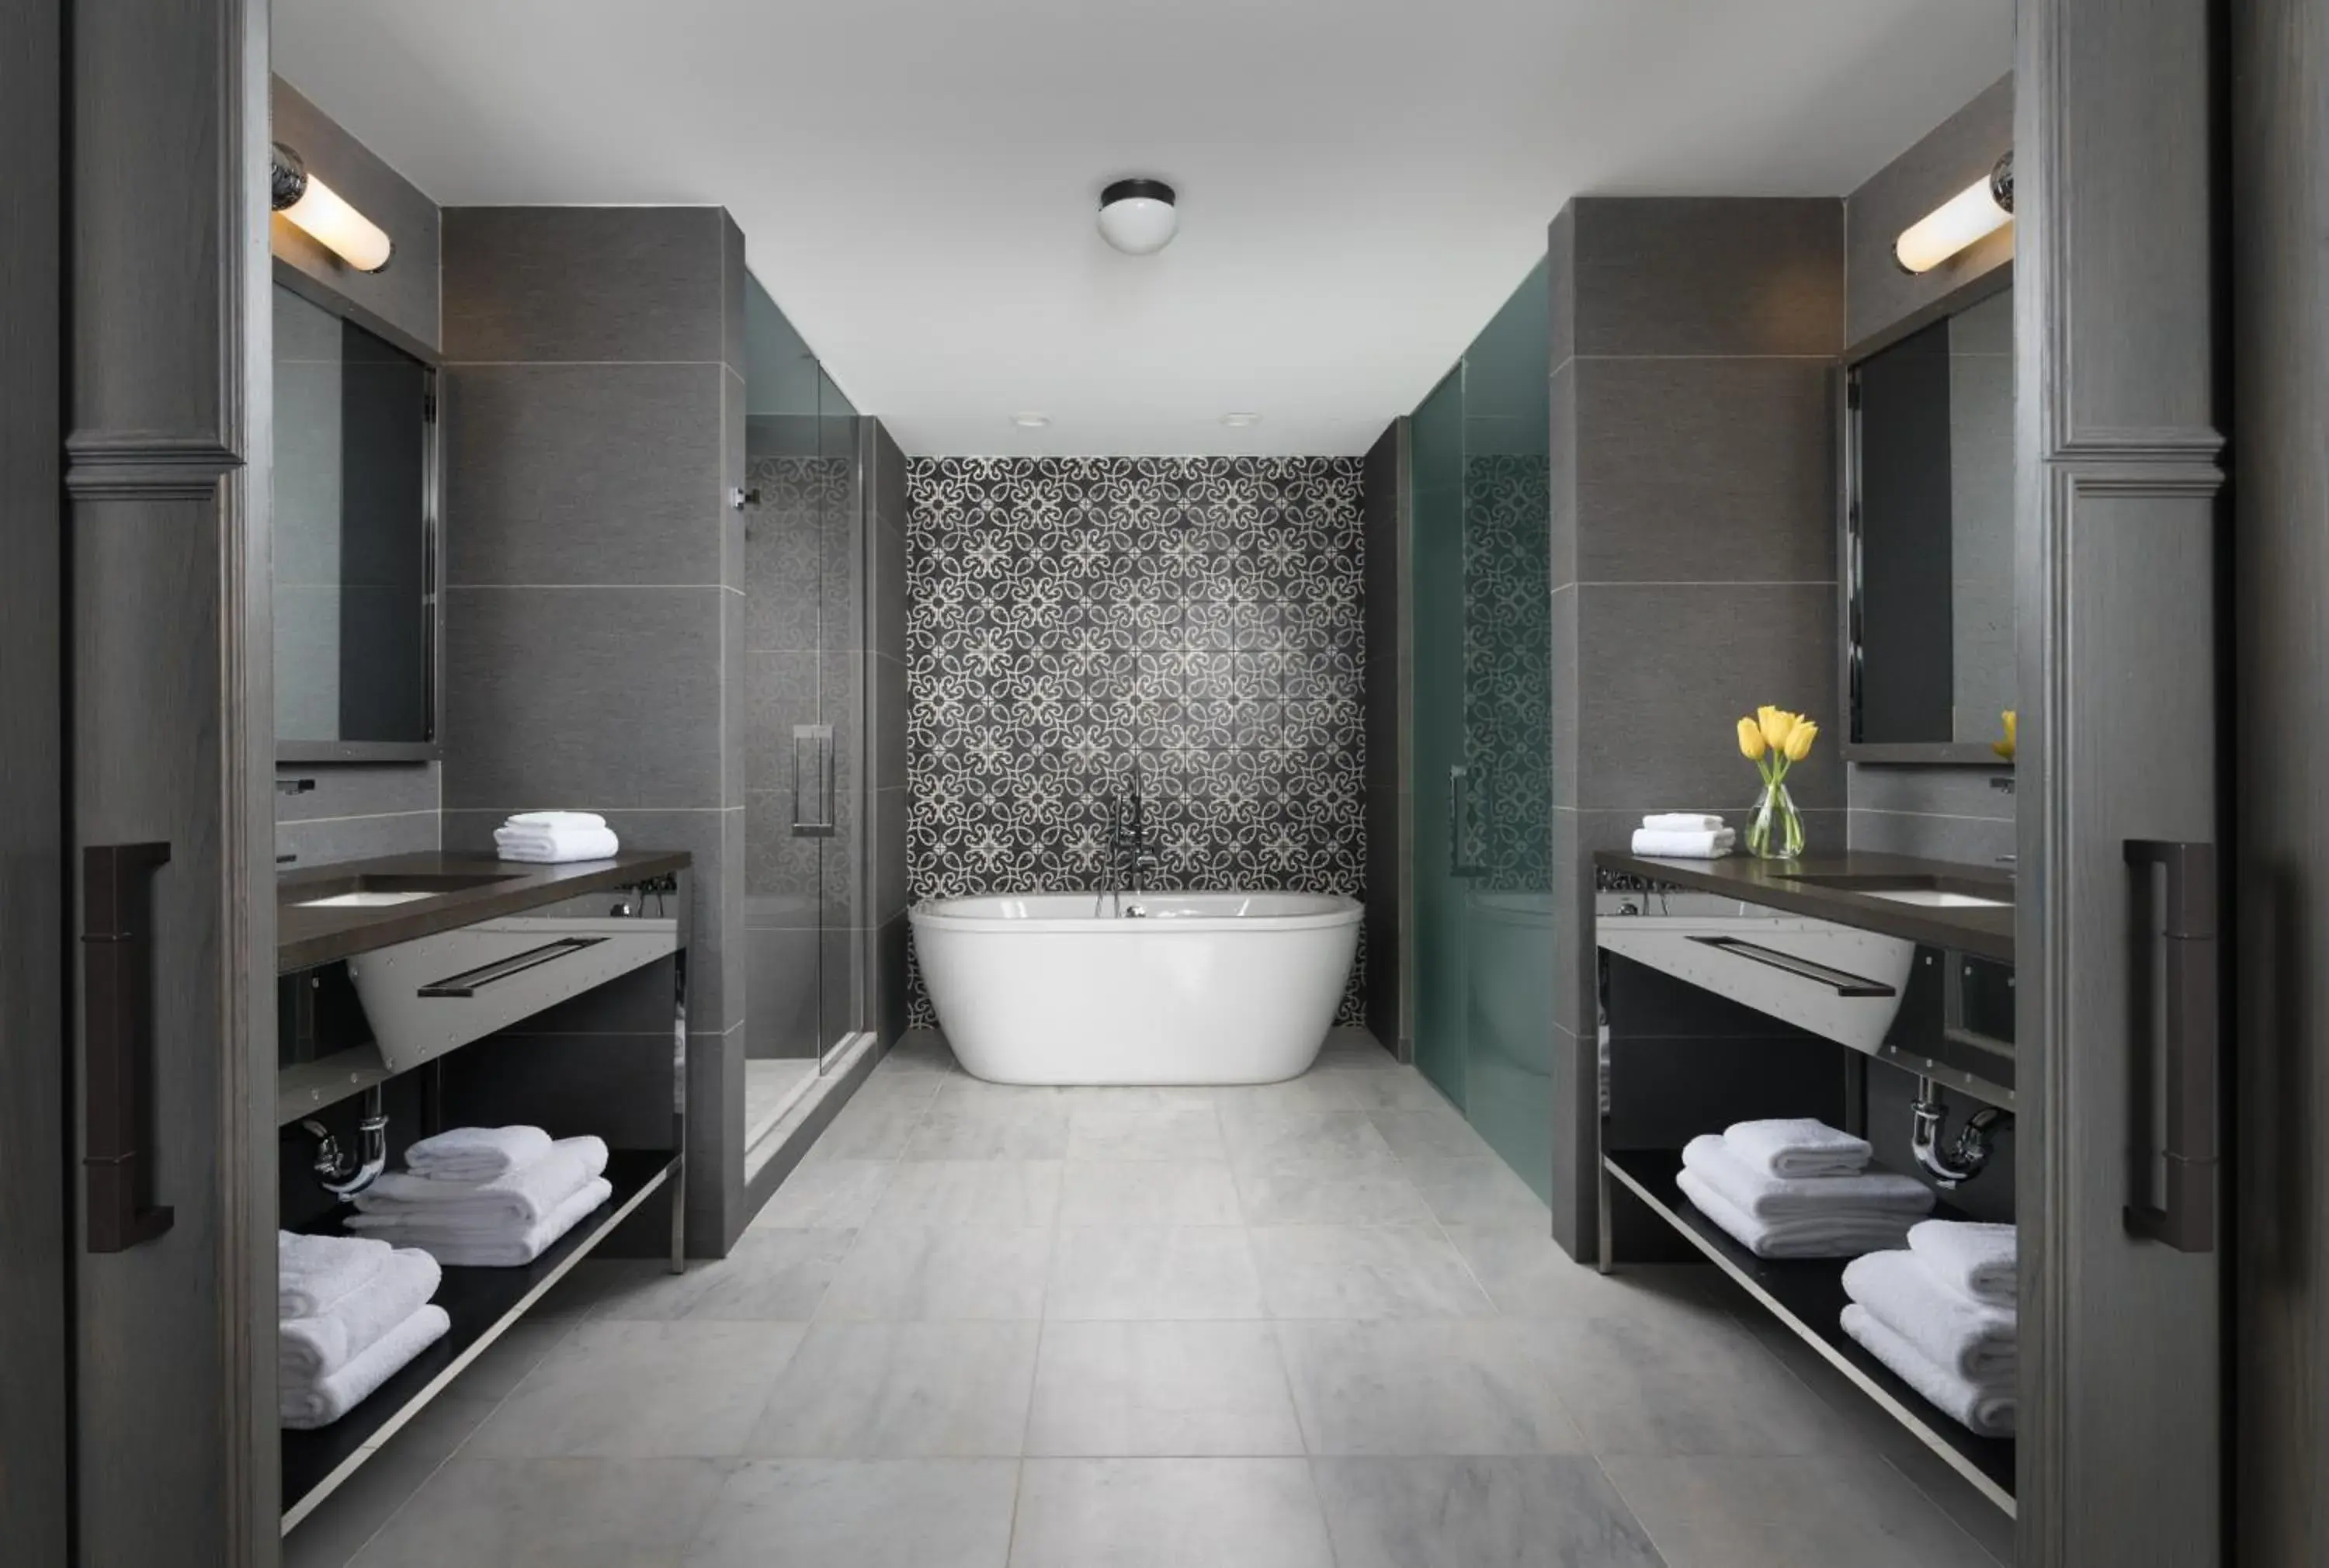 Photo of the whole room, Bathroom in Hotel Van Zandt